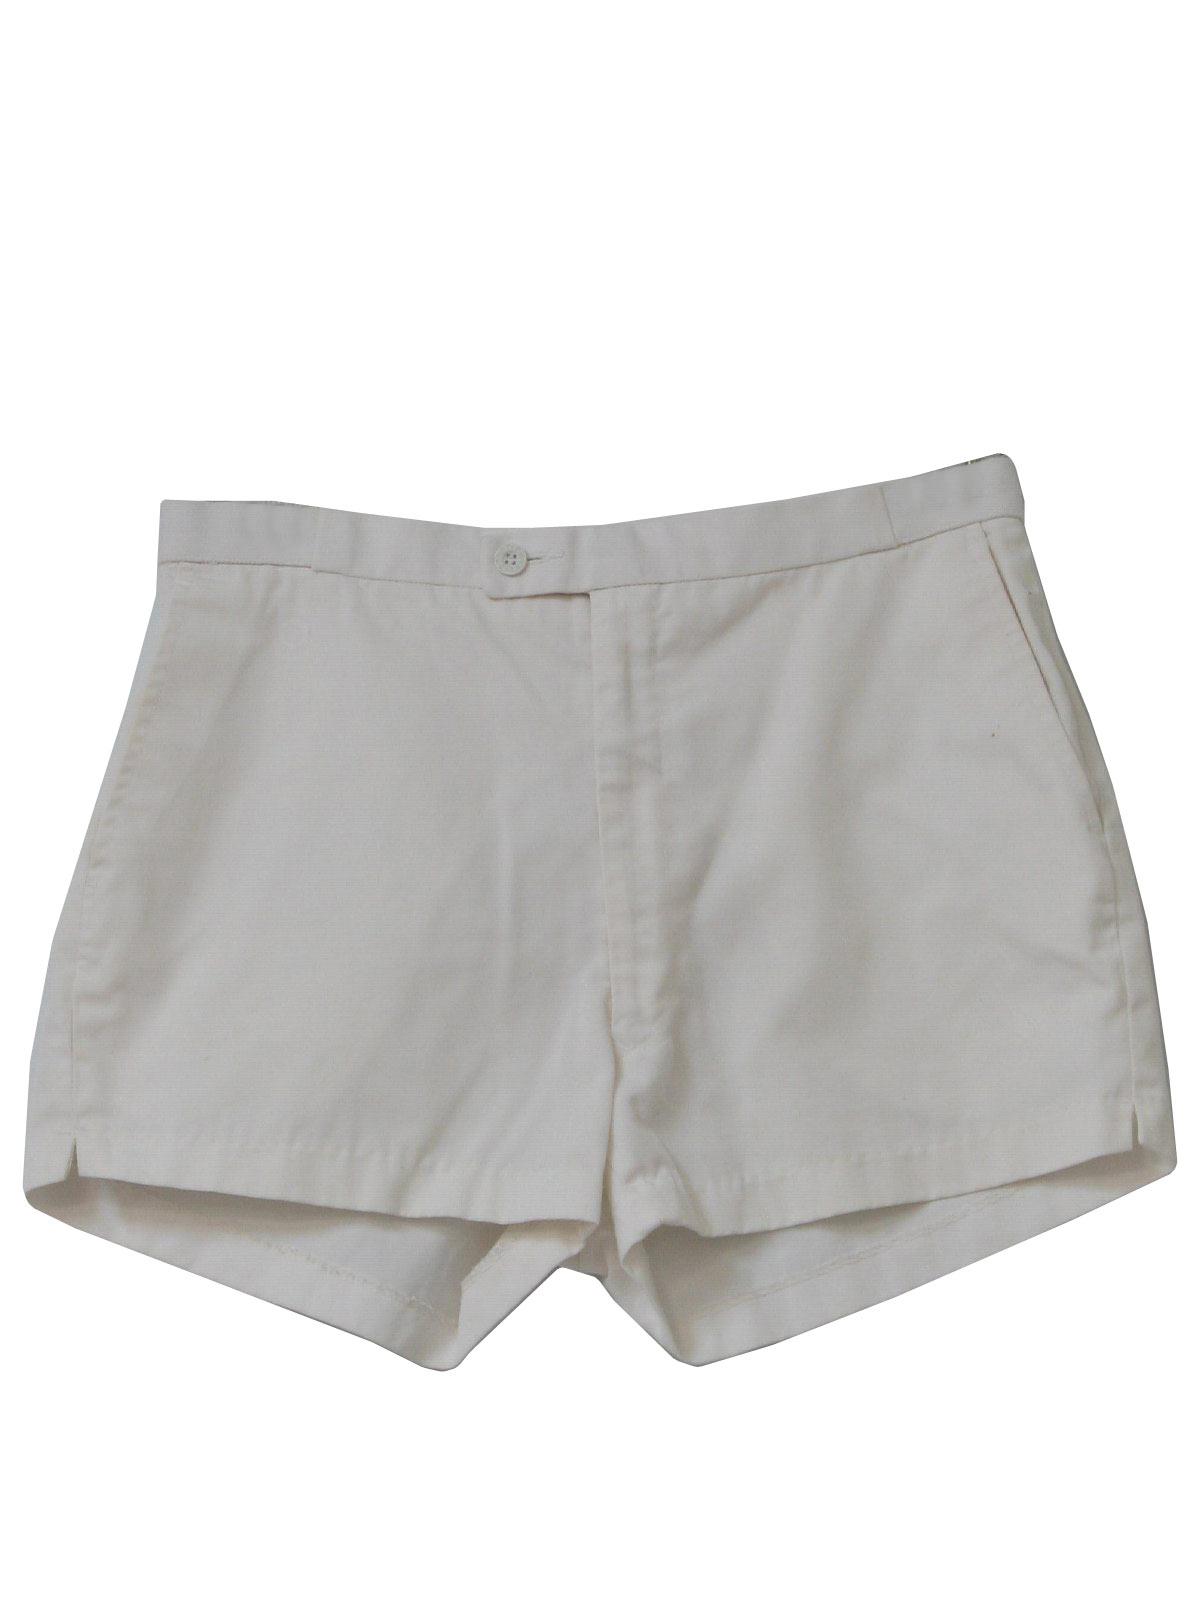 Boast 1990s Vintage Shorts: 90s -Boast- Mens white thick cotton high ...